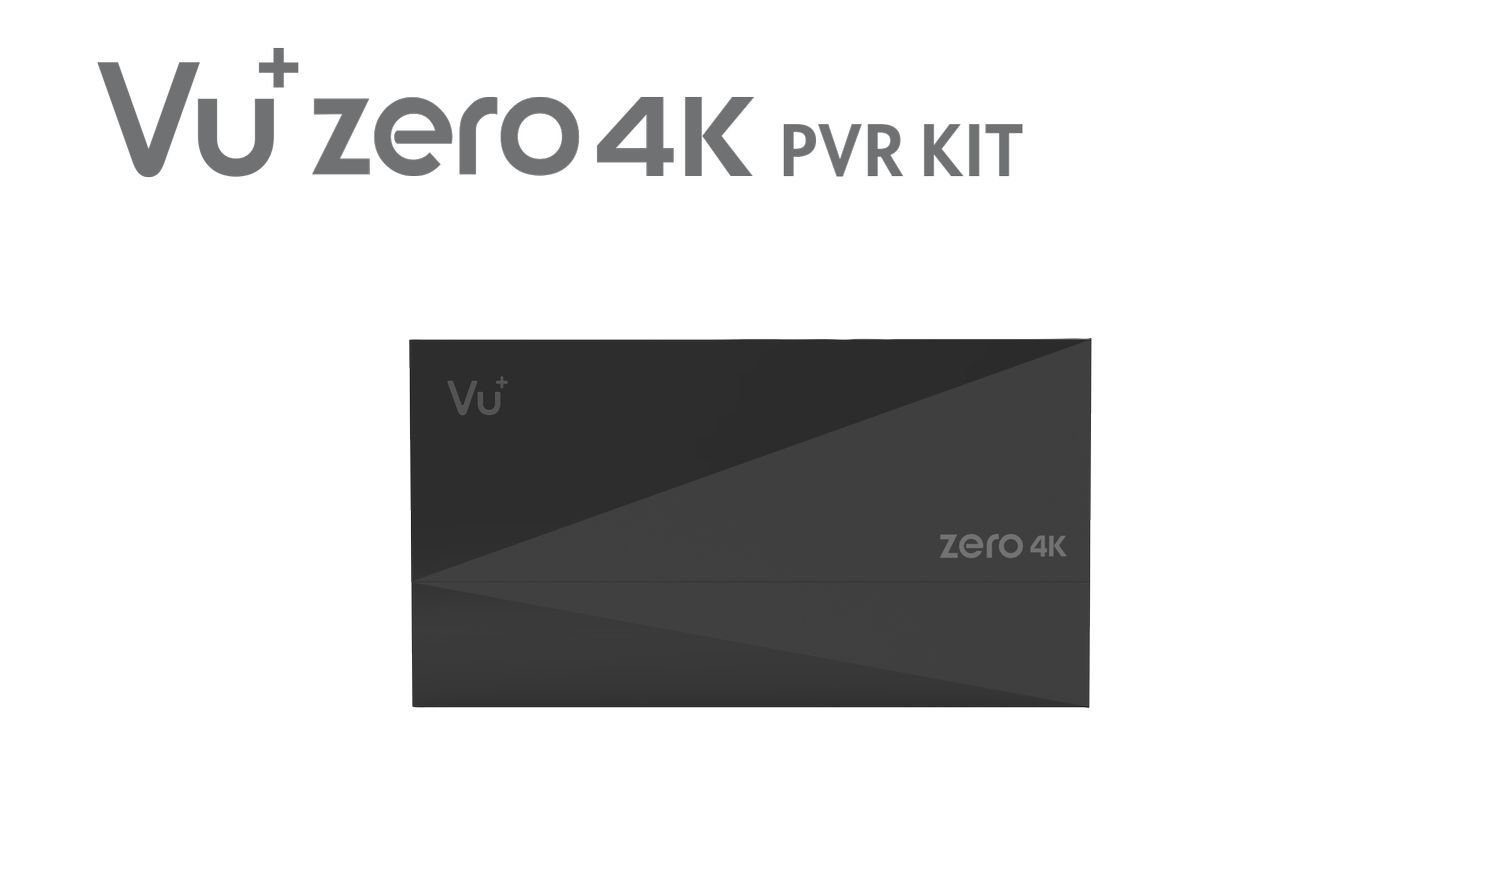 VU+ VU+ Zero Inklusive HDD, Tuner Kit PVR 2TB, 4K schwarz